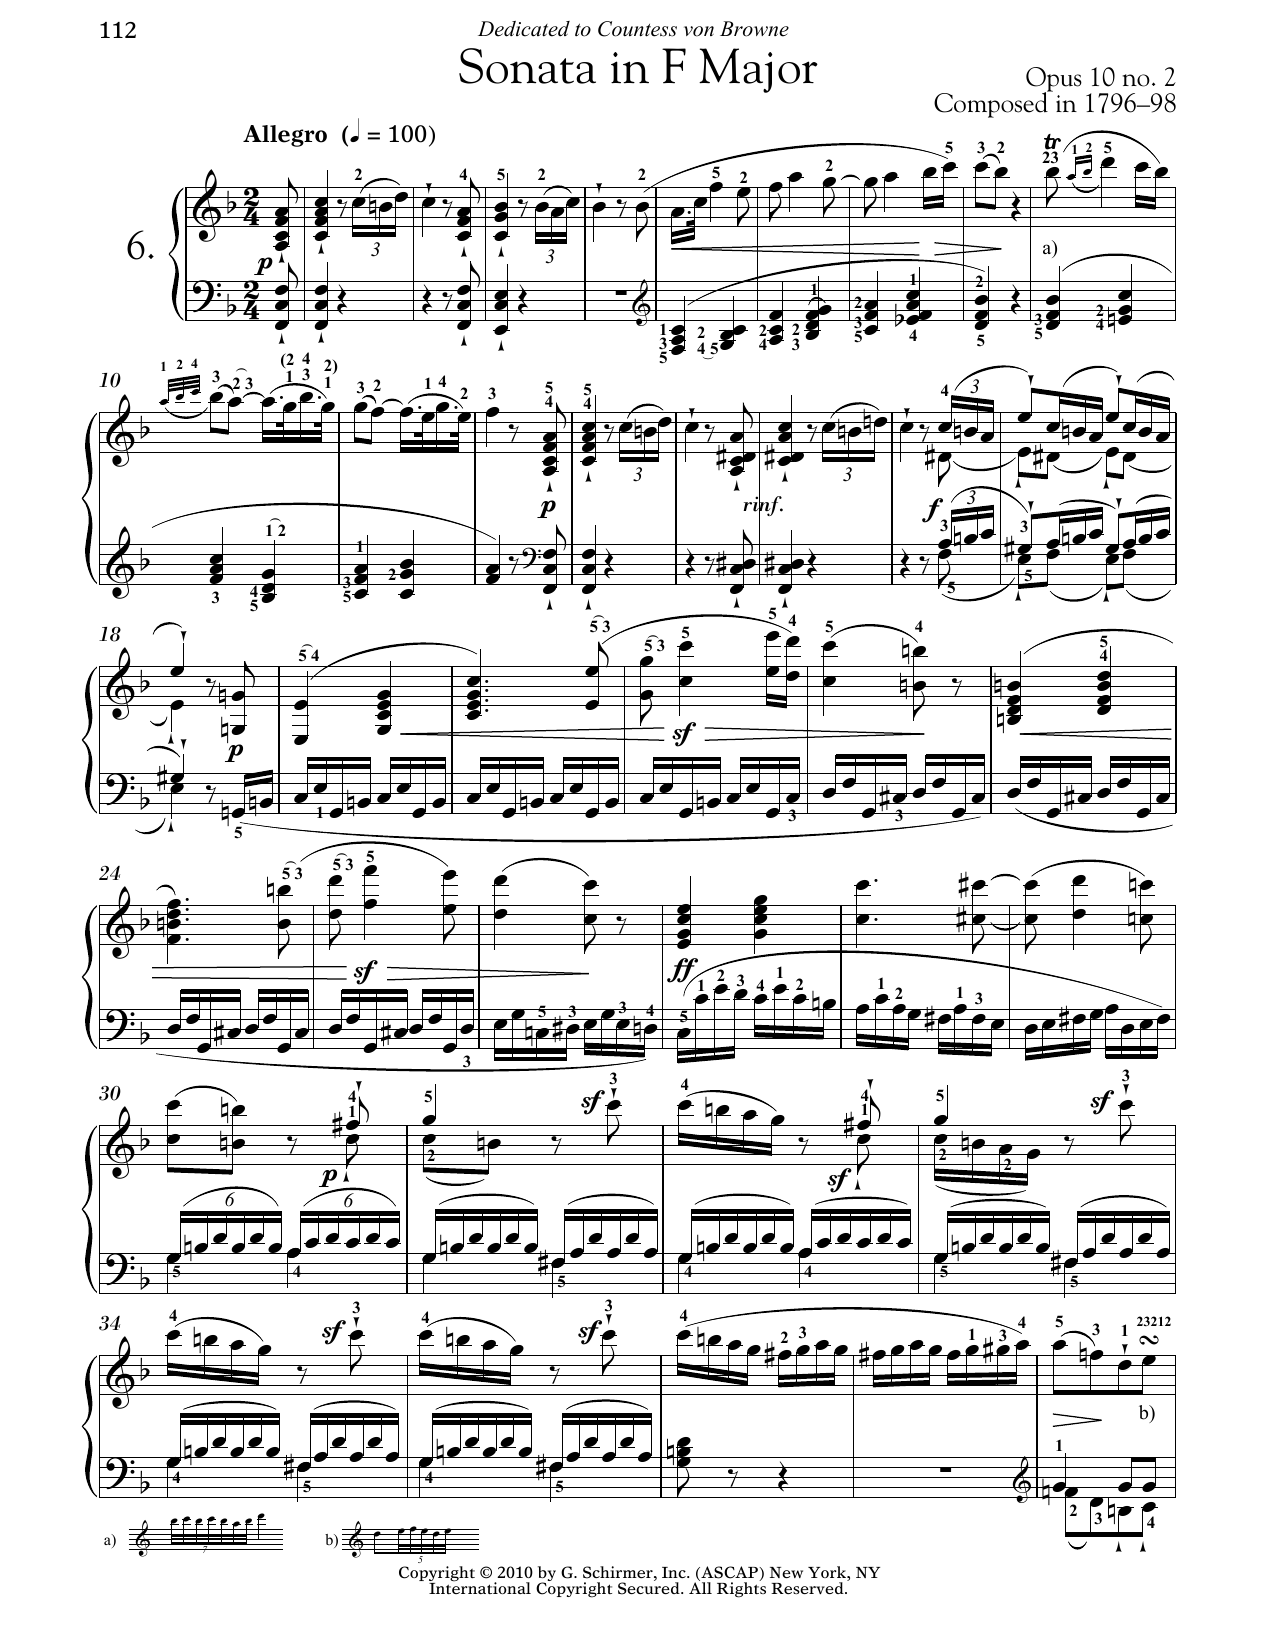 Ludwig van Beethoven Piano Sonata No. 6 In F Major, Op. 10, No. 2 Sheet Music Notes & Chords for Piano - Download or Print PDF